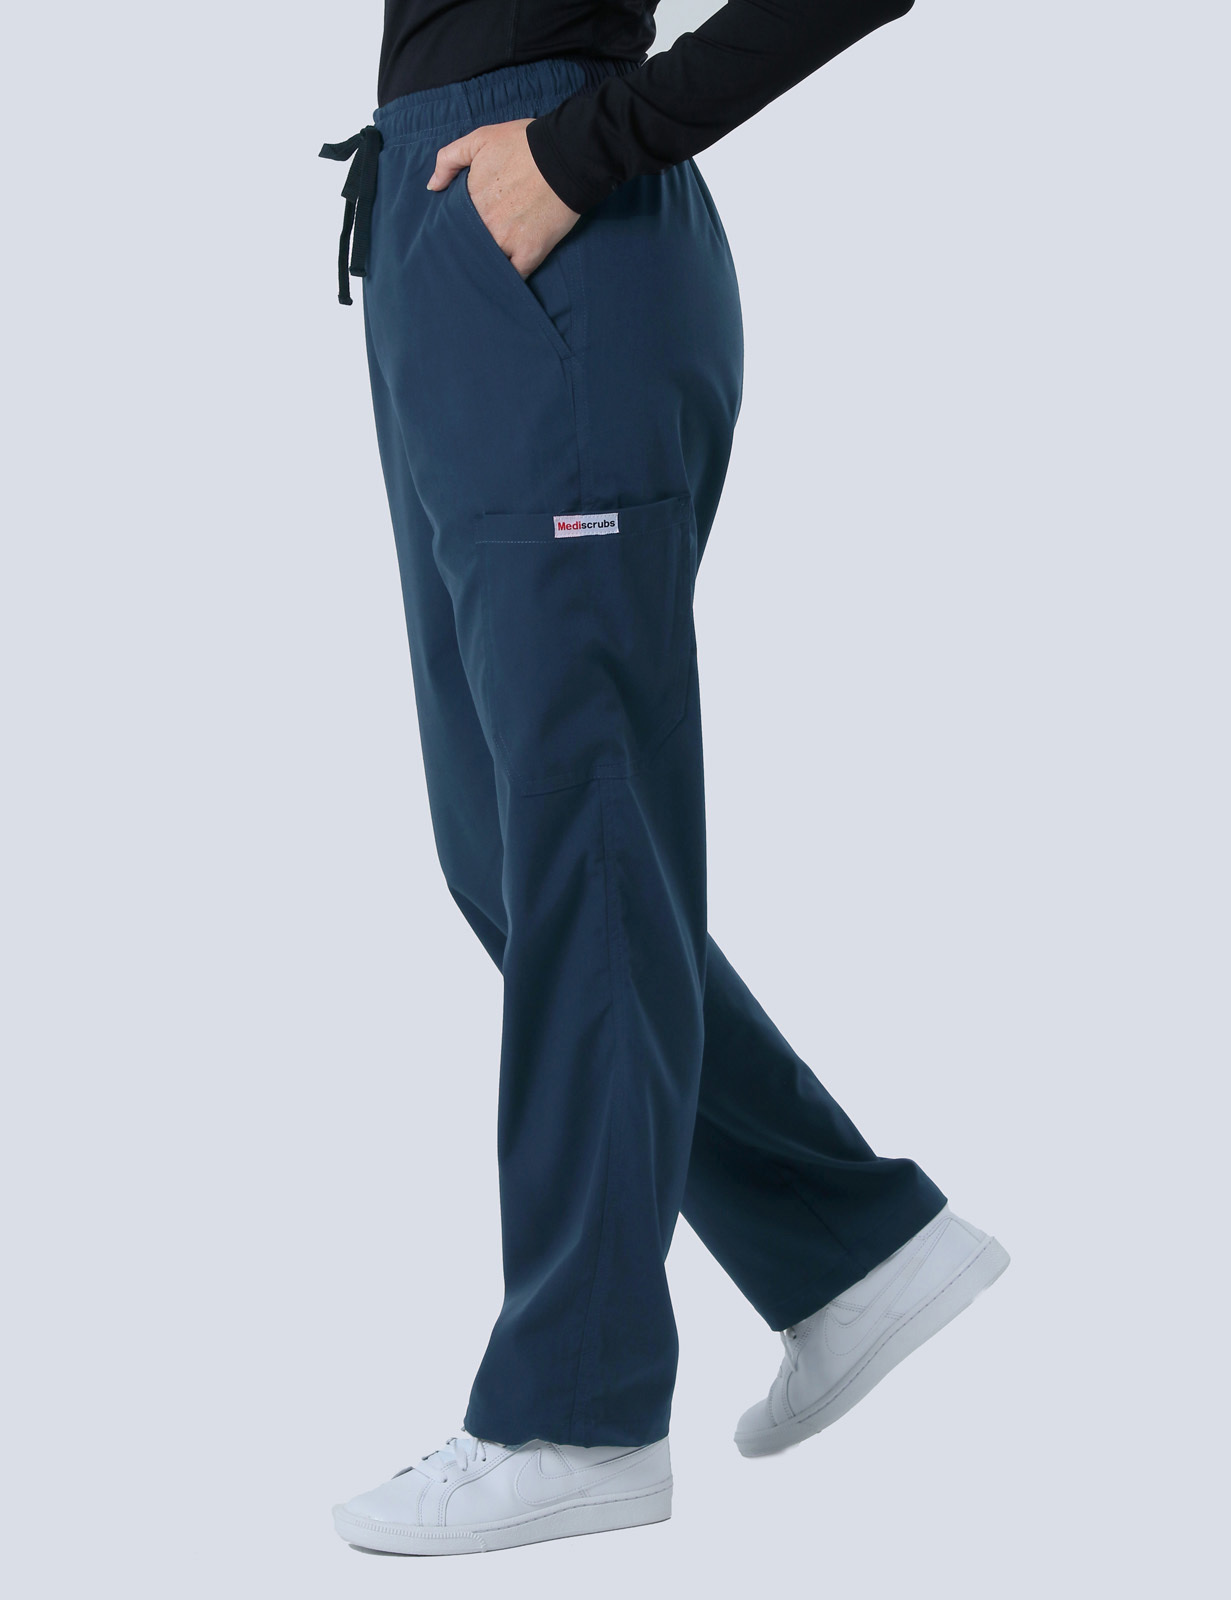 PAH - Cardiac Scientist (4 Pocket Scrub Top and Cargo Pants in Navy incl Logos)